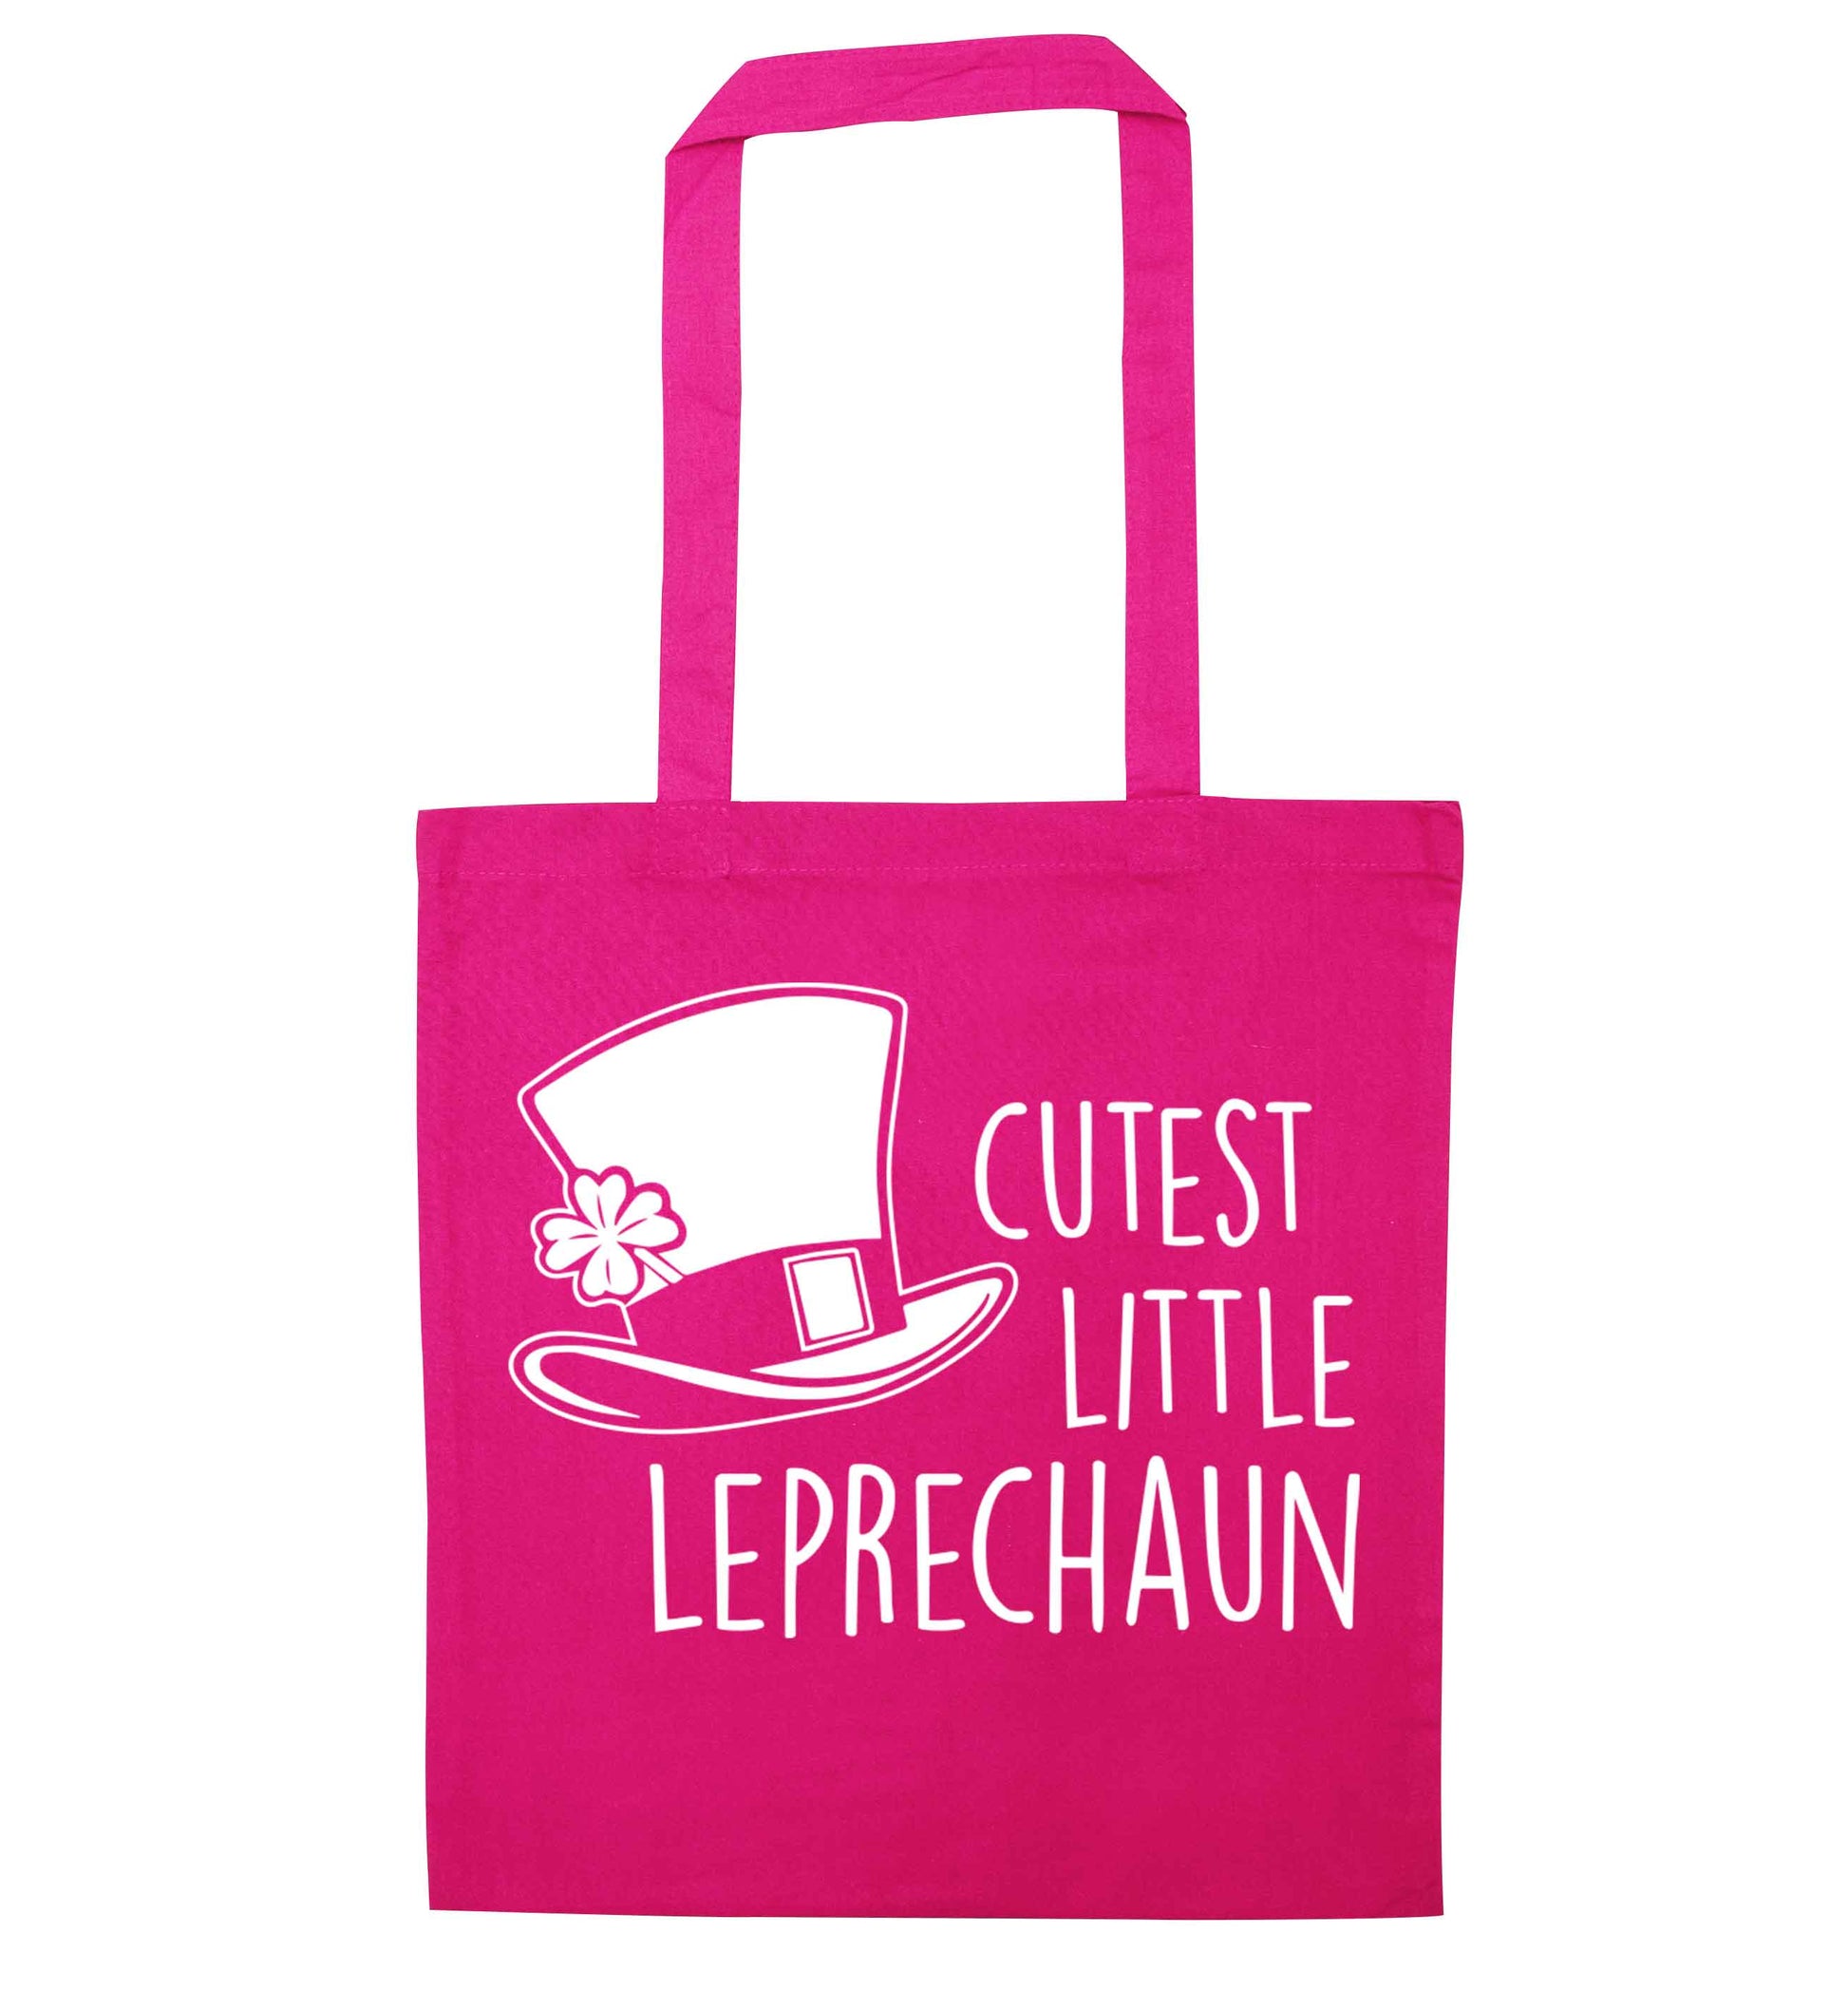 Cutest little leprechaun pink tote bag